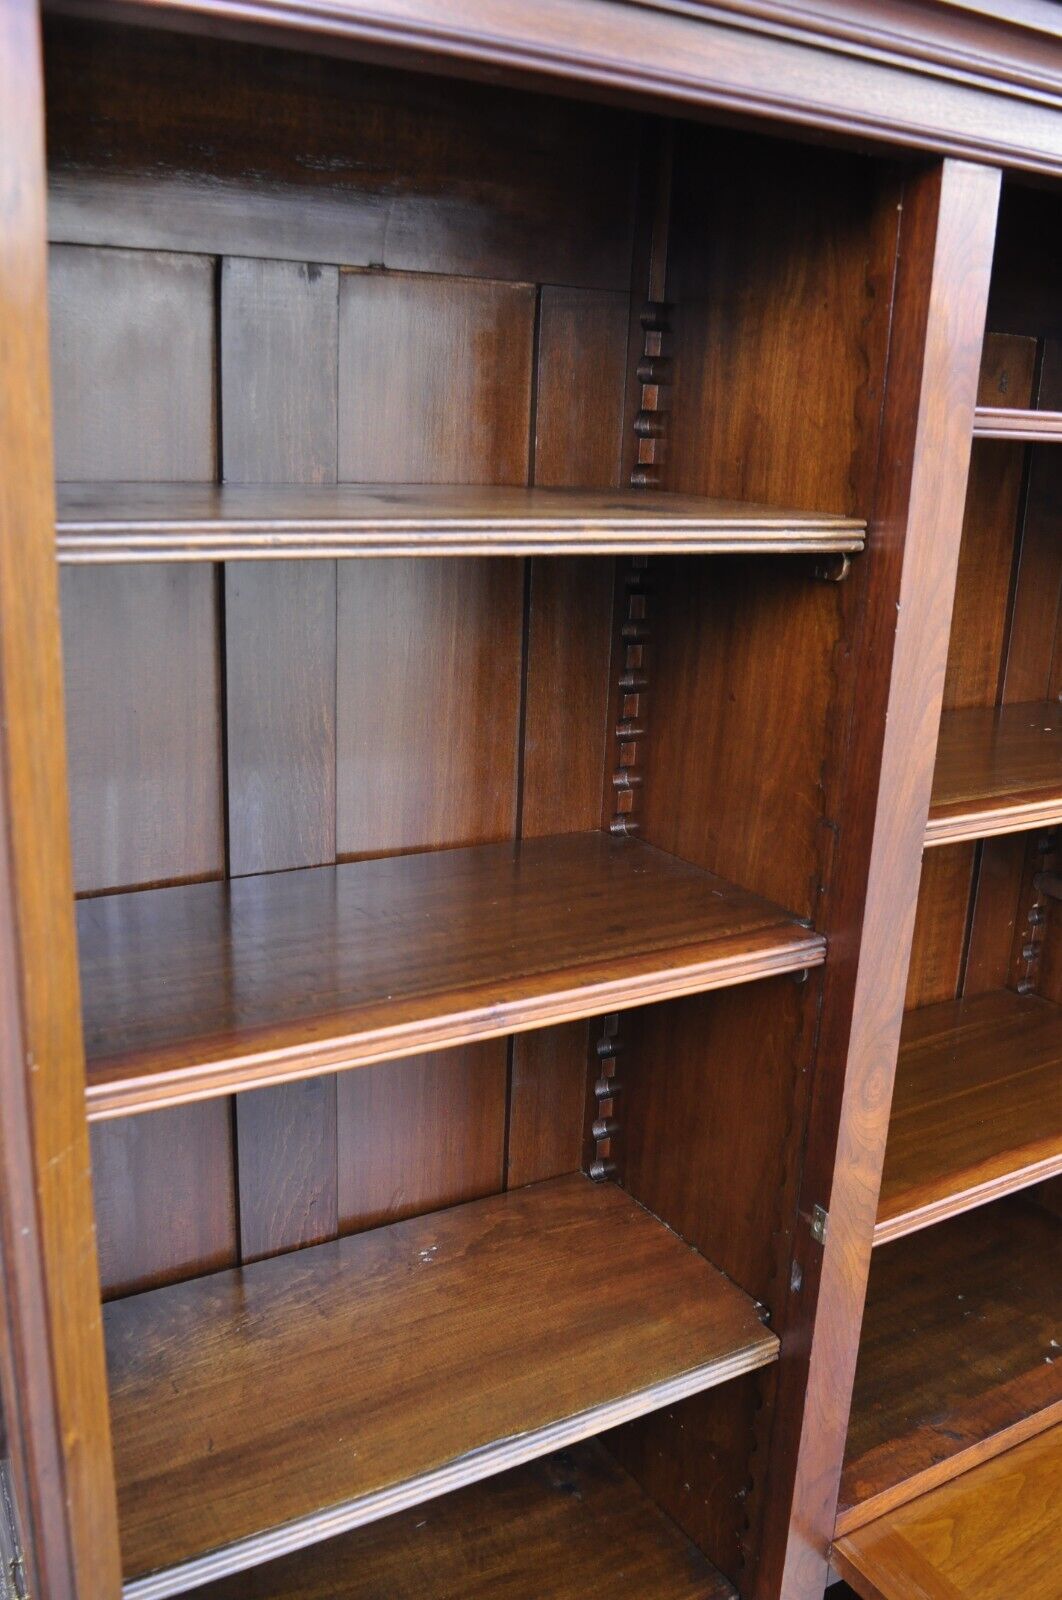 Antique Eastlake Victorian Walnut Wavy Glass Triple Bookcase Display Cabinet